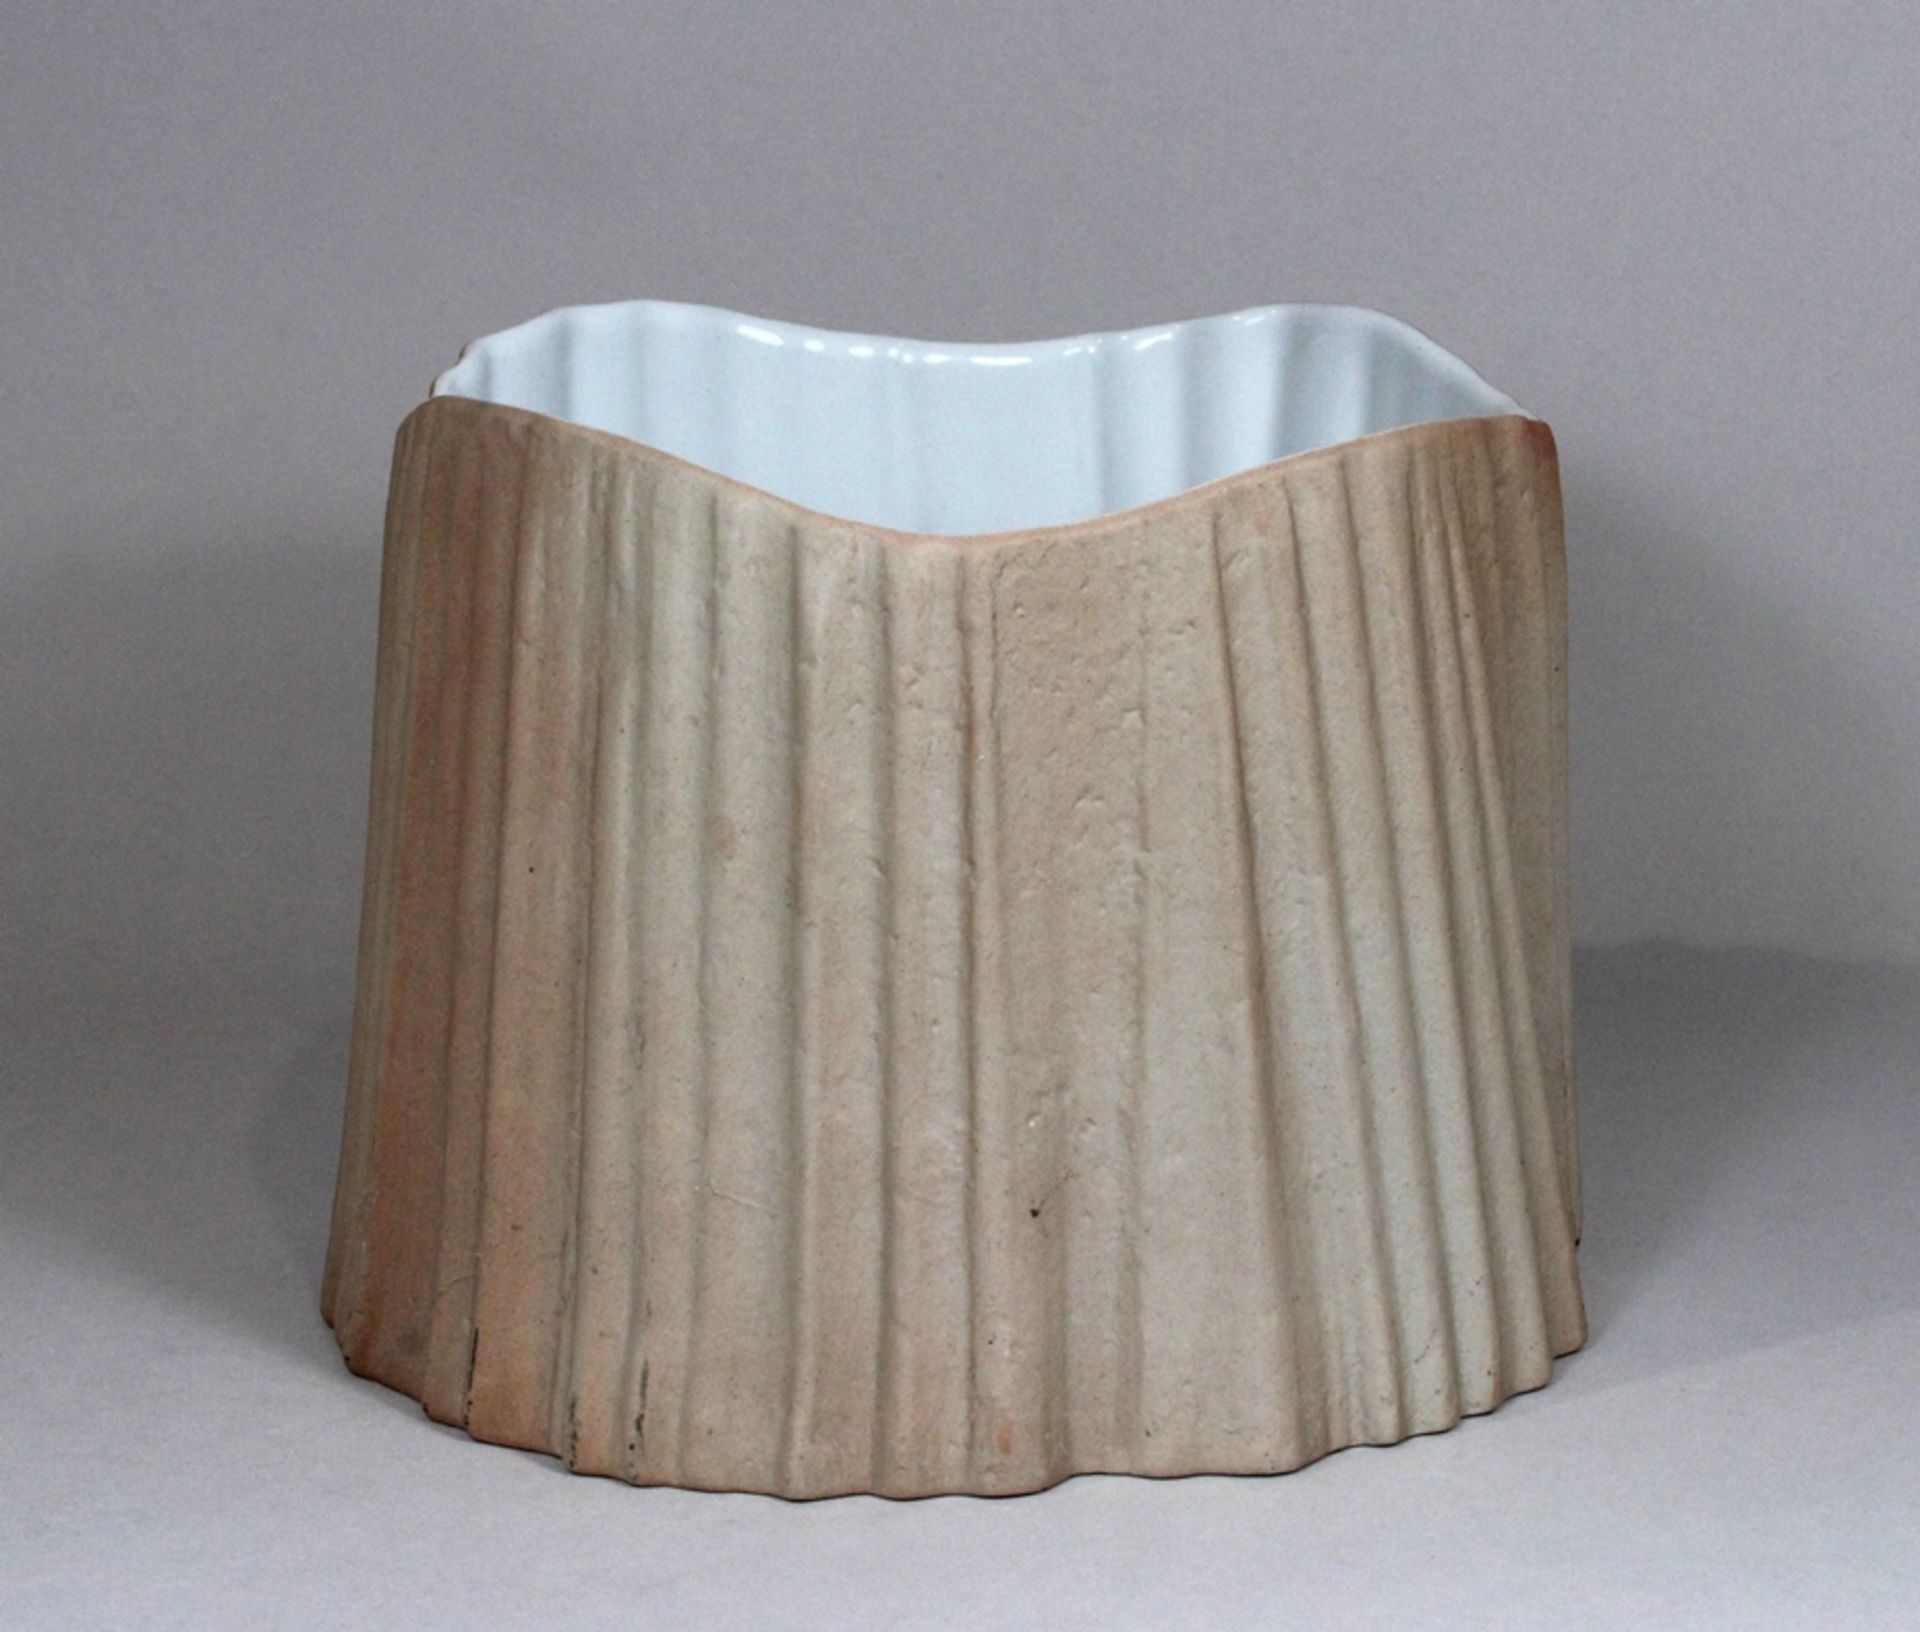 Keramikvase, Rosenthal, um 1980,  H.: 17,5 cm, Dm.: 22 cm. Guter, altersbedingter Zustand. - Bild 2 aus 3